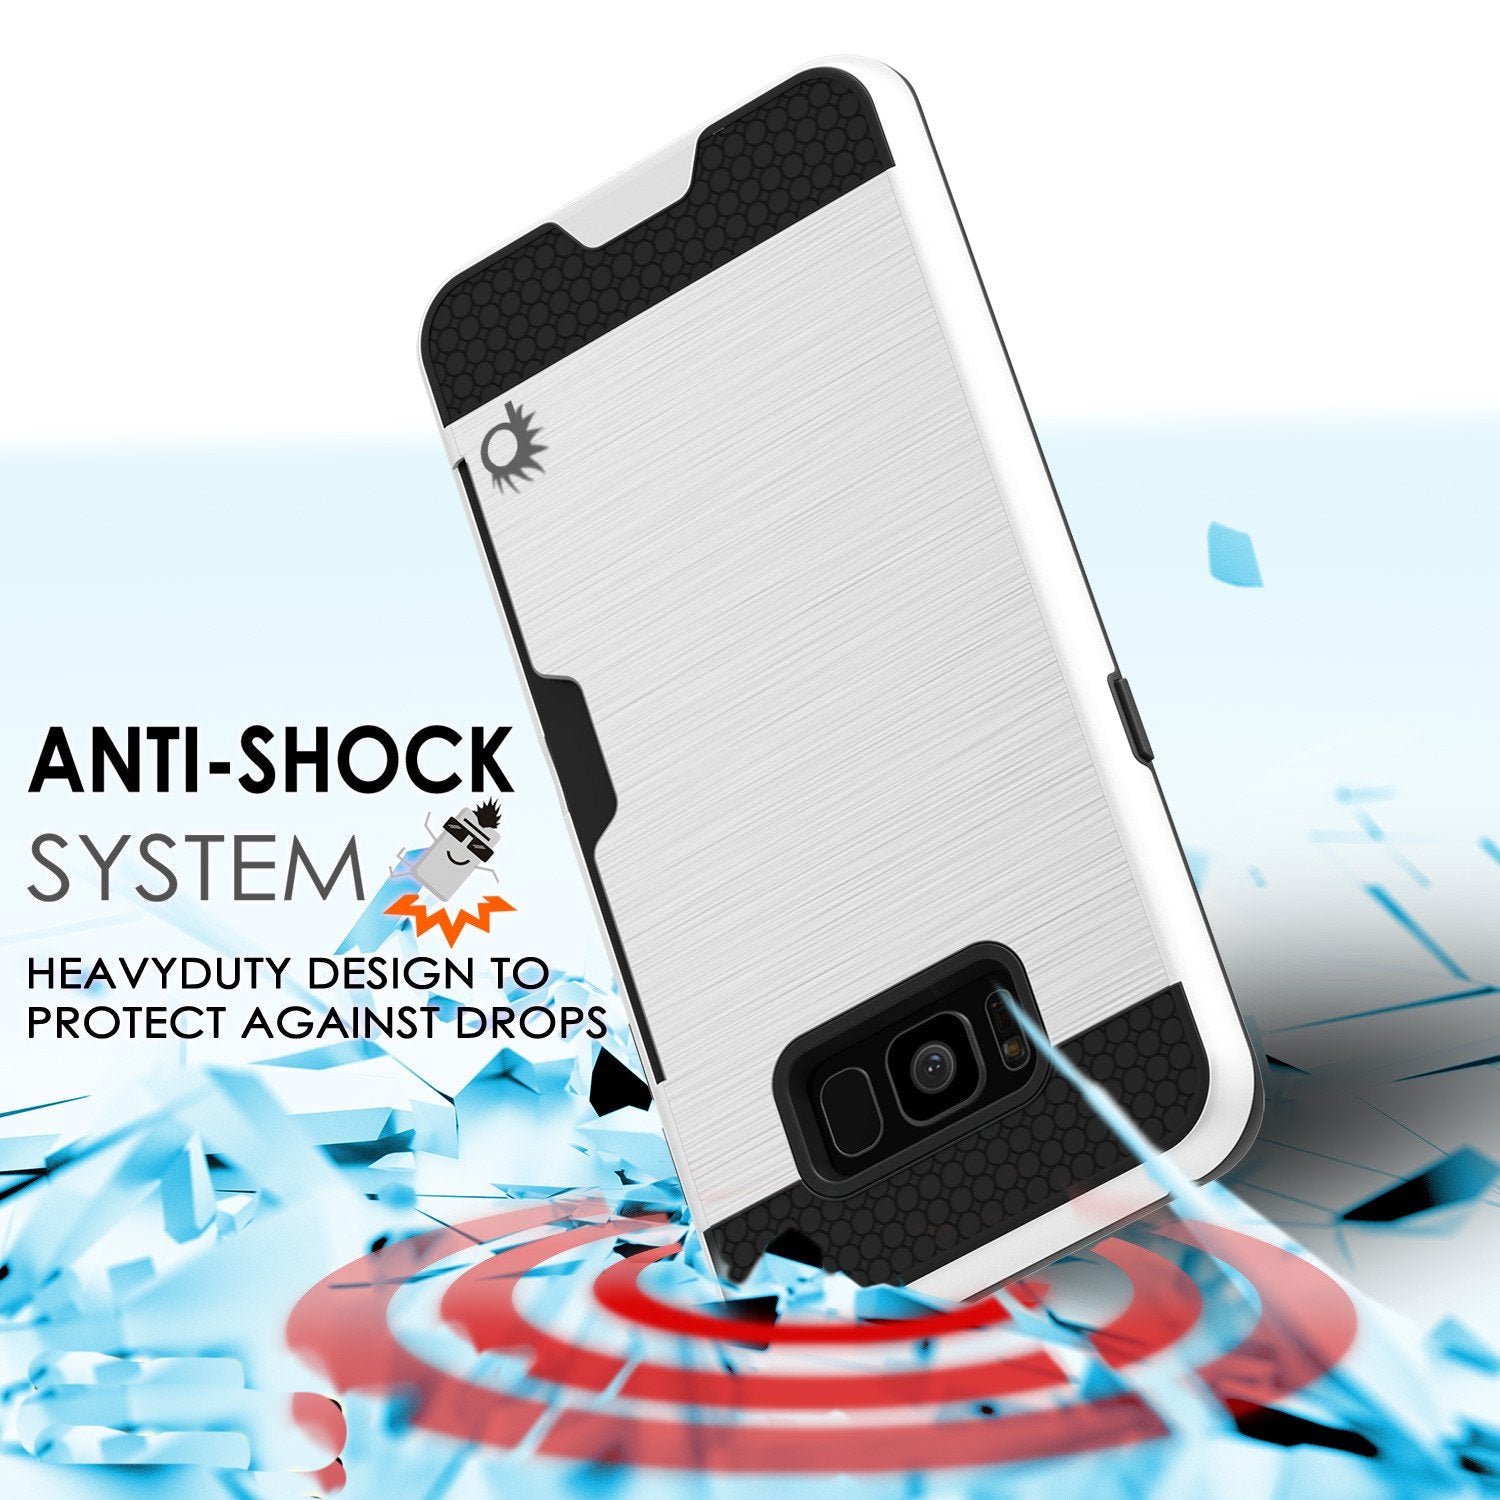 Galaxy S8 Plus Dual-Layer, Anti-Shock, SLOT Series Case [White]